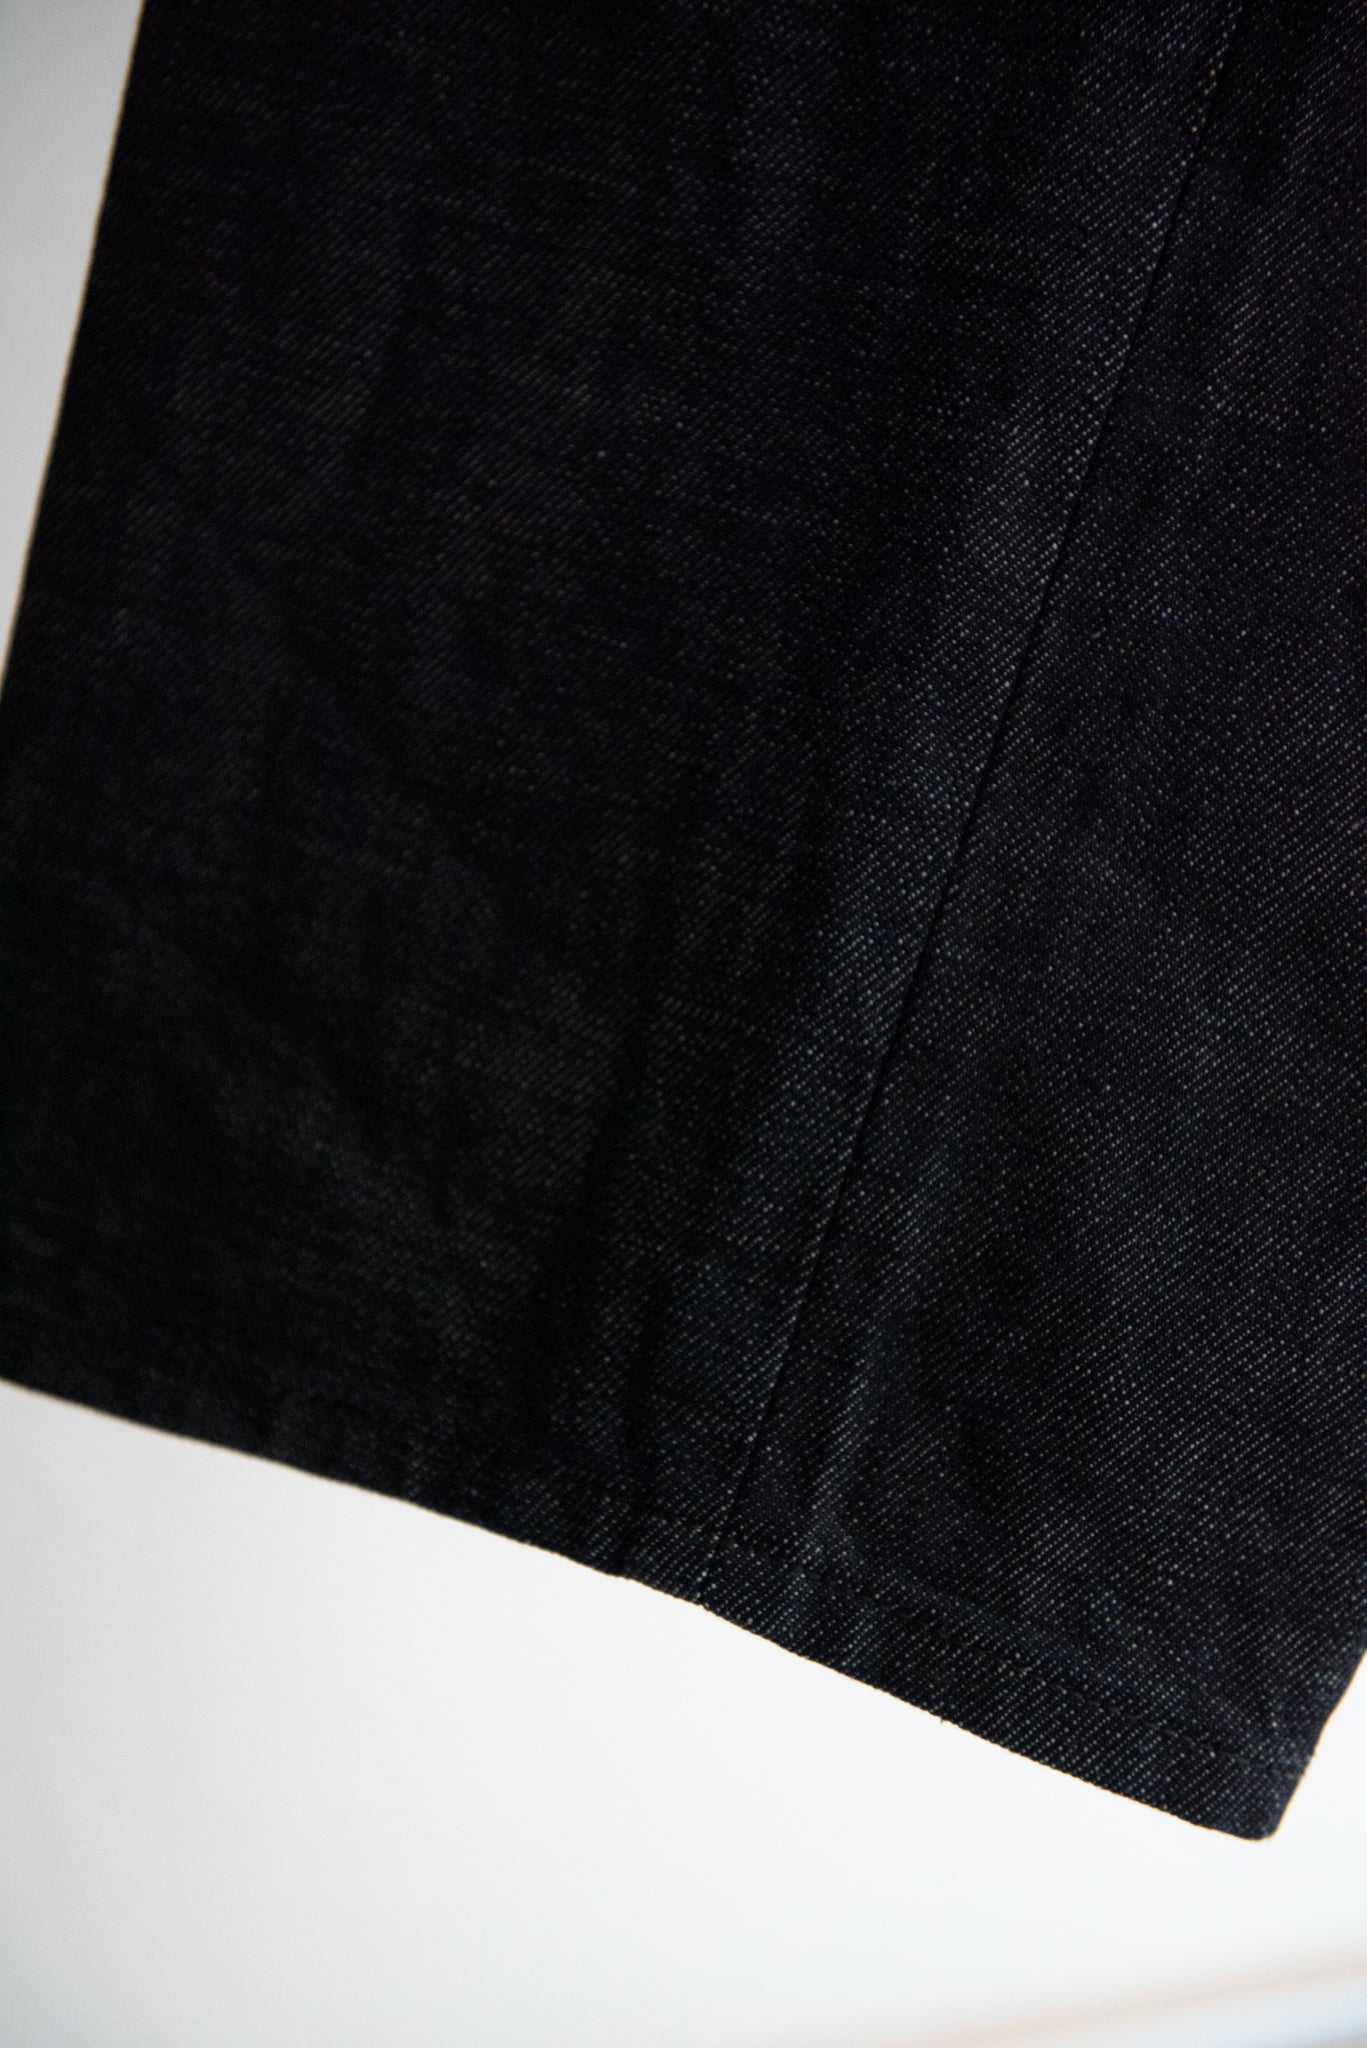 LOUNGE ACT / Vintage Pattern Trousers Denim